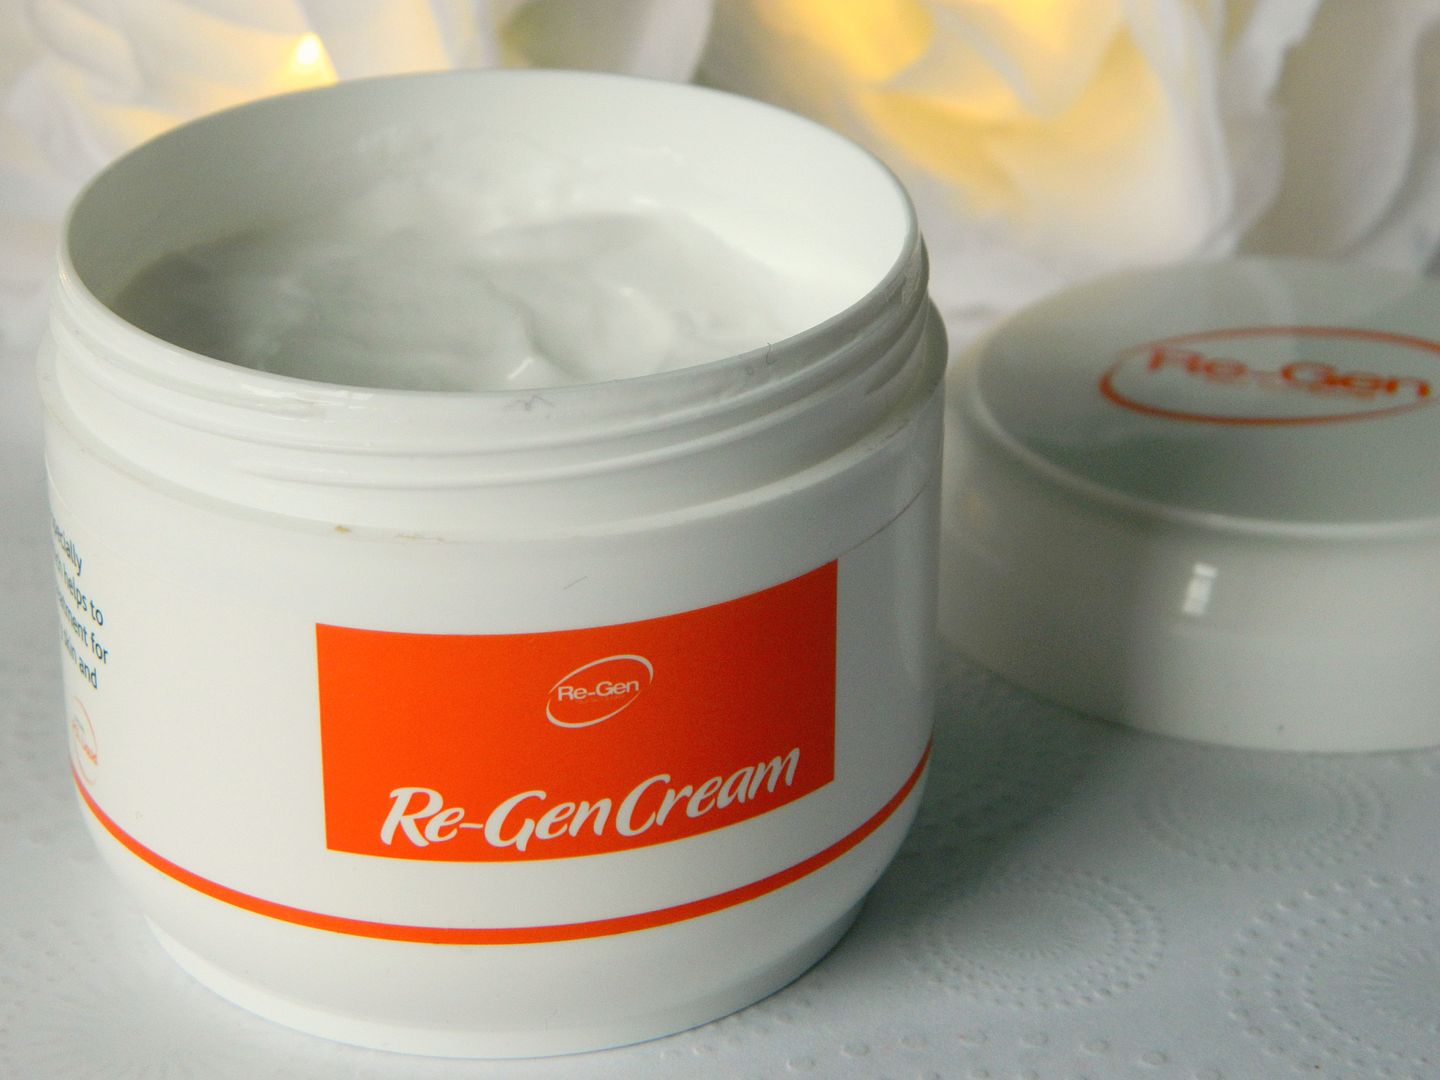 Silkia Re-Gen Cream Pot Product Review Belle-amie